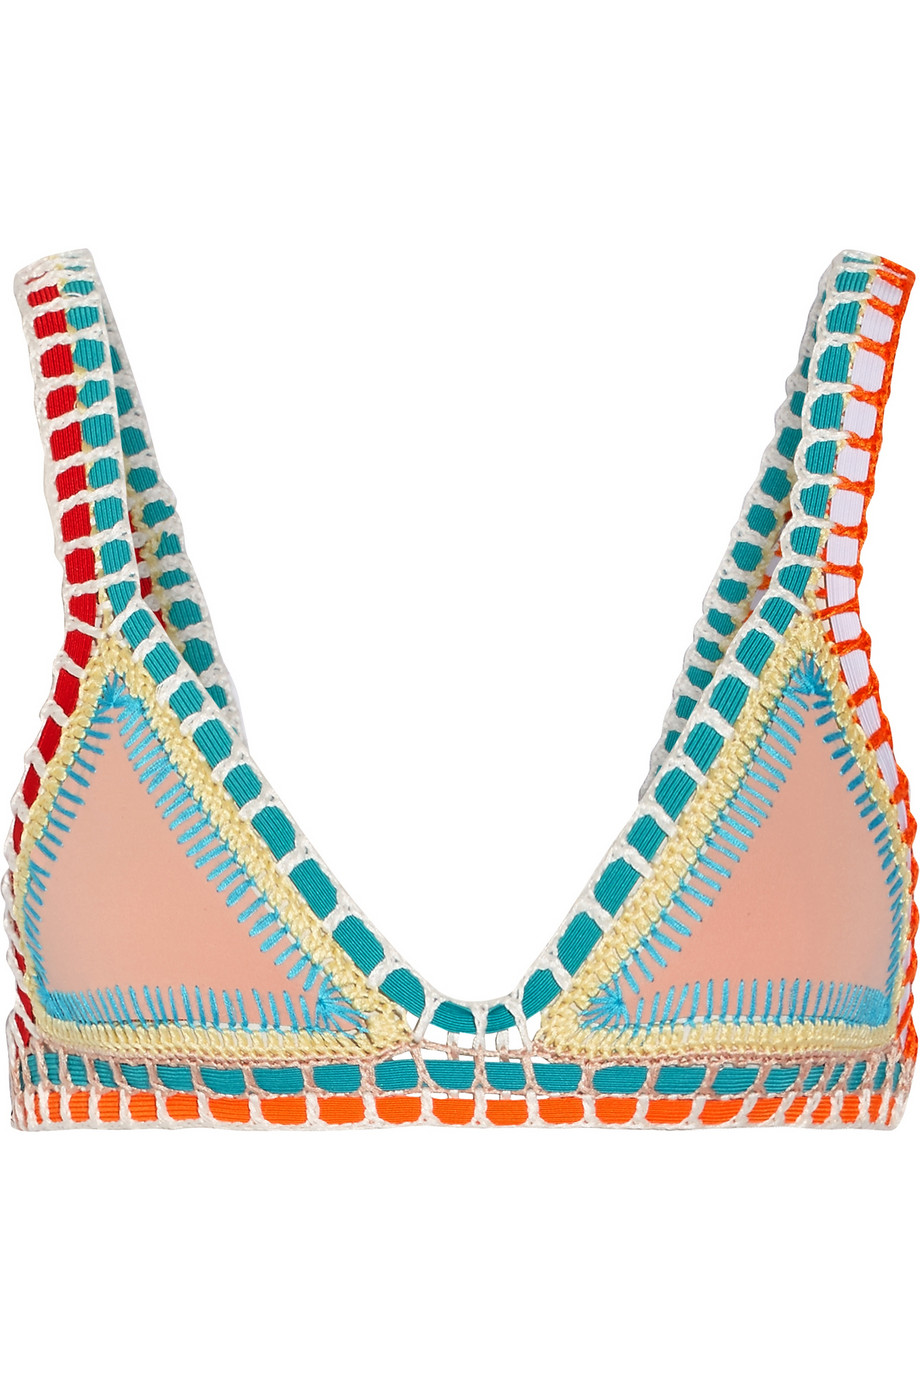 Splurge: Margot Robbie’s Hawaii Kiini Luna Crochet Trimmed Triangle ...